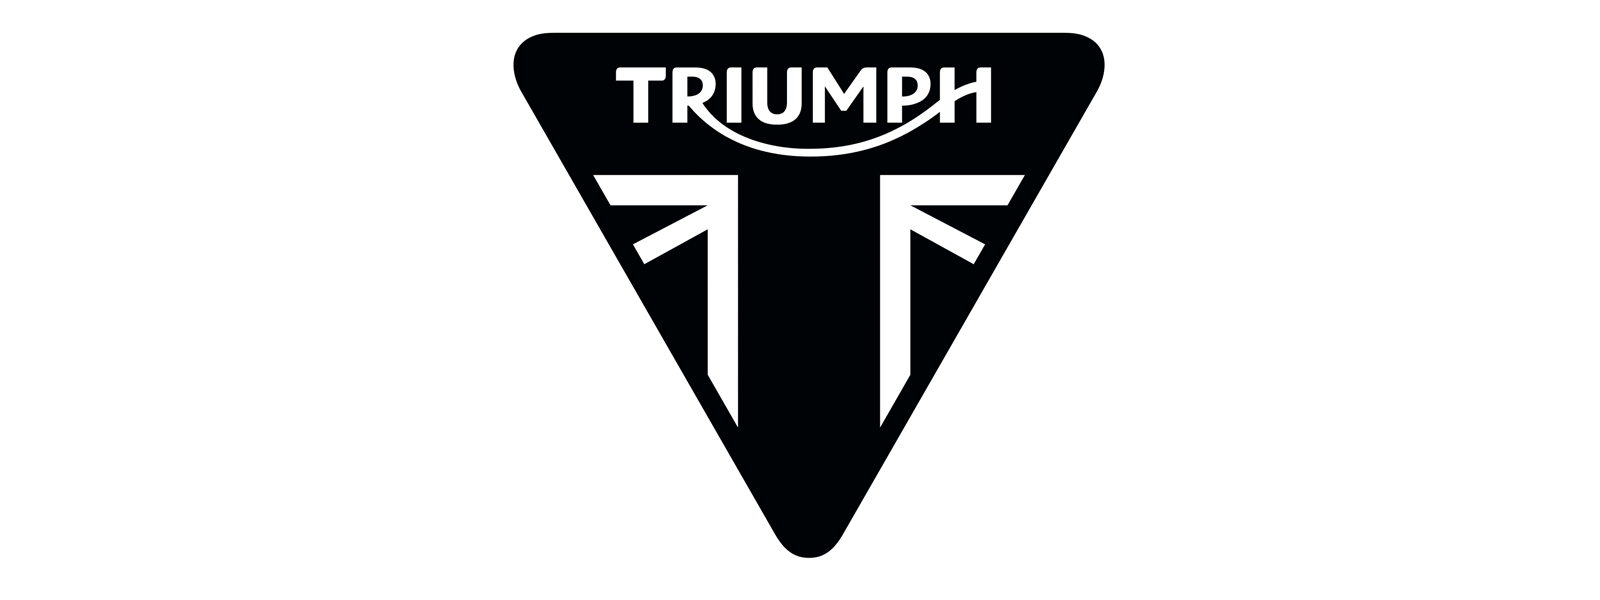 Triumph motorcycles Logos